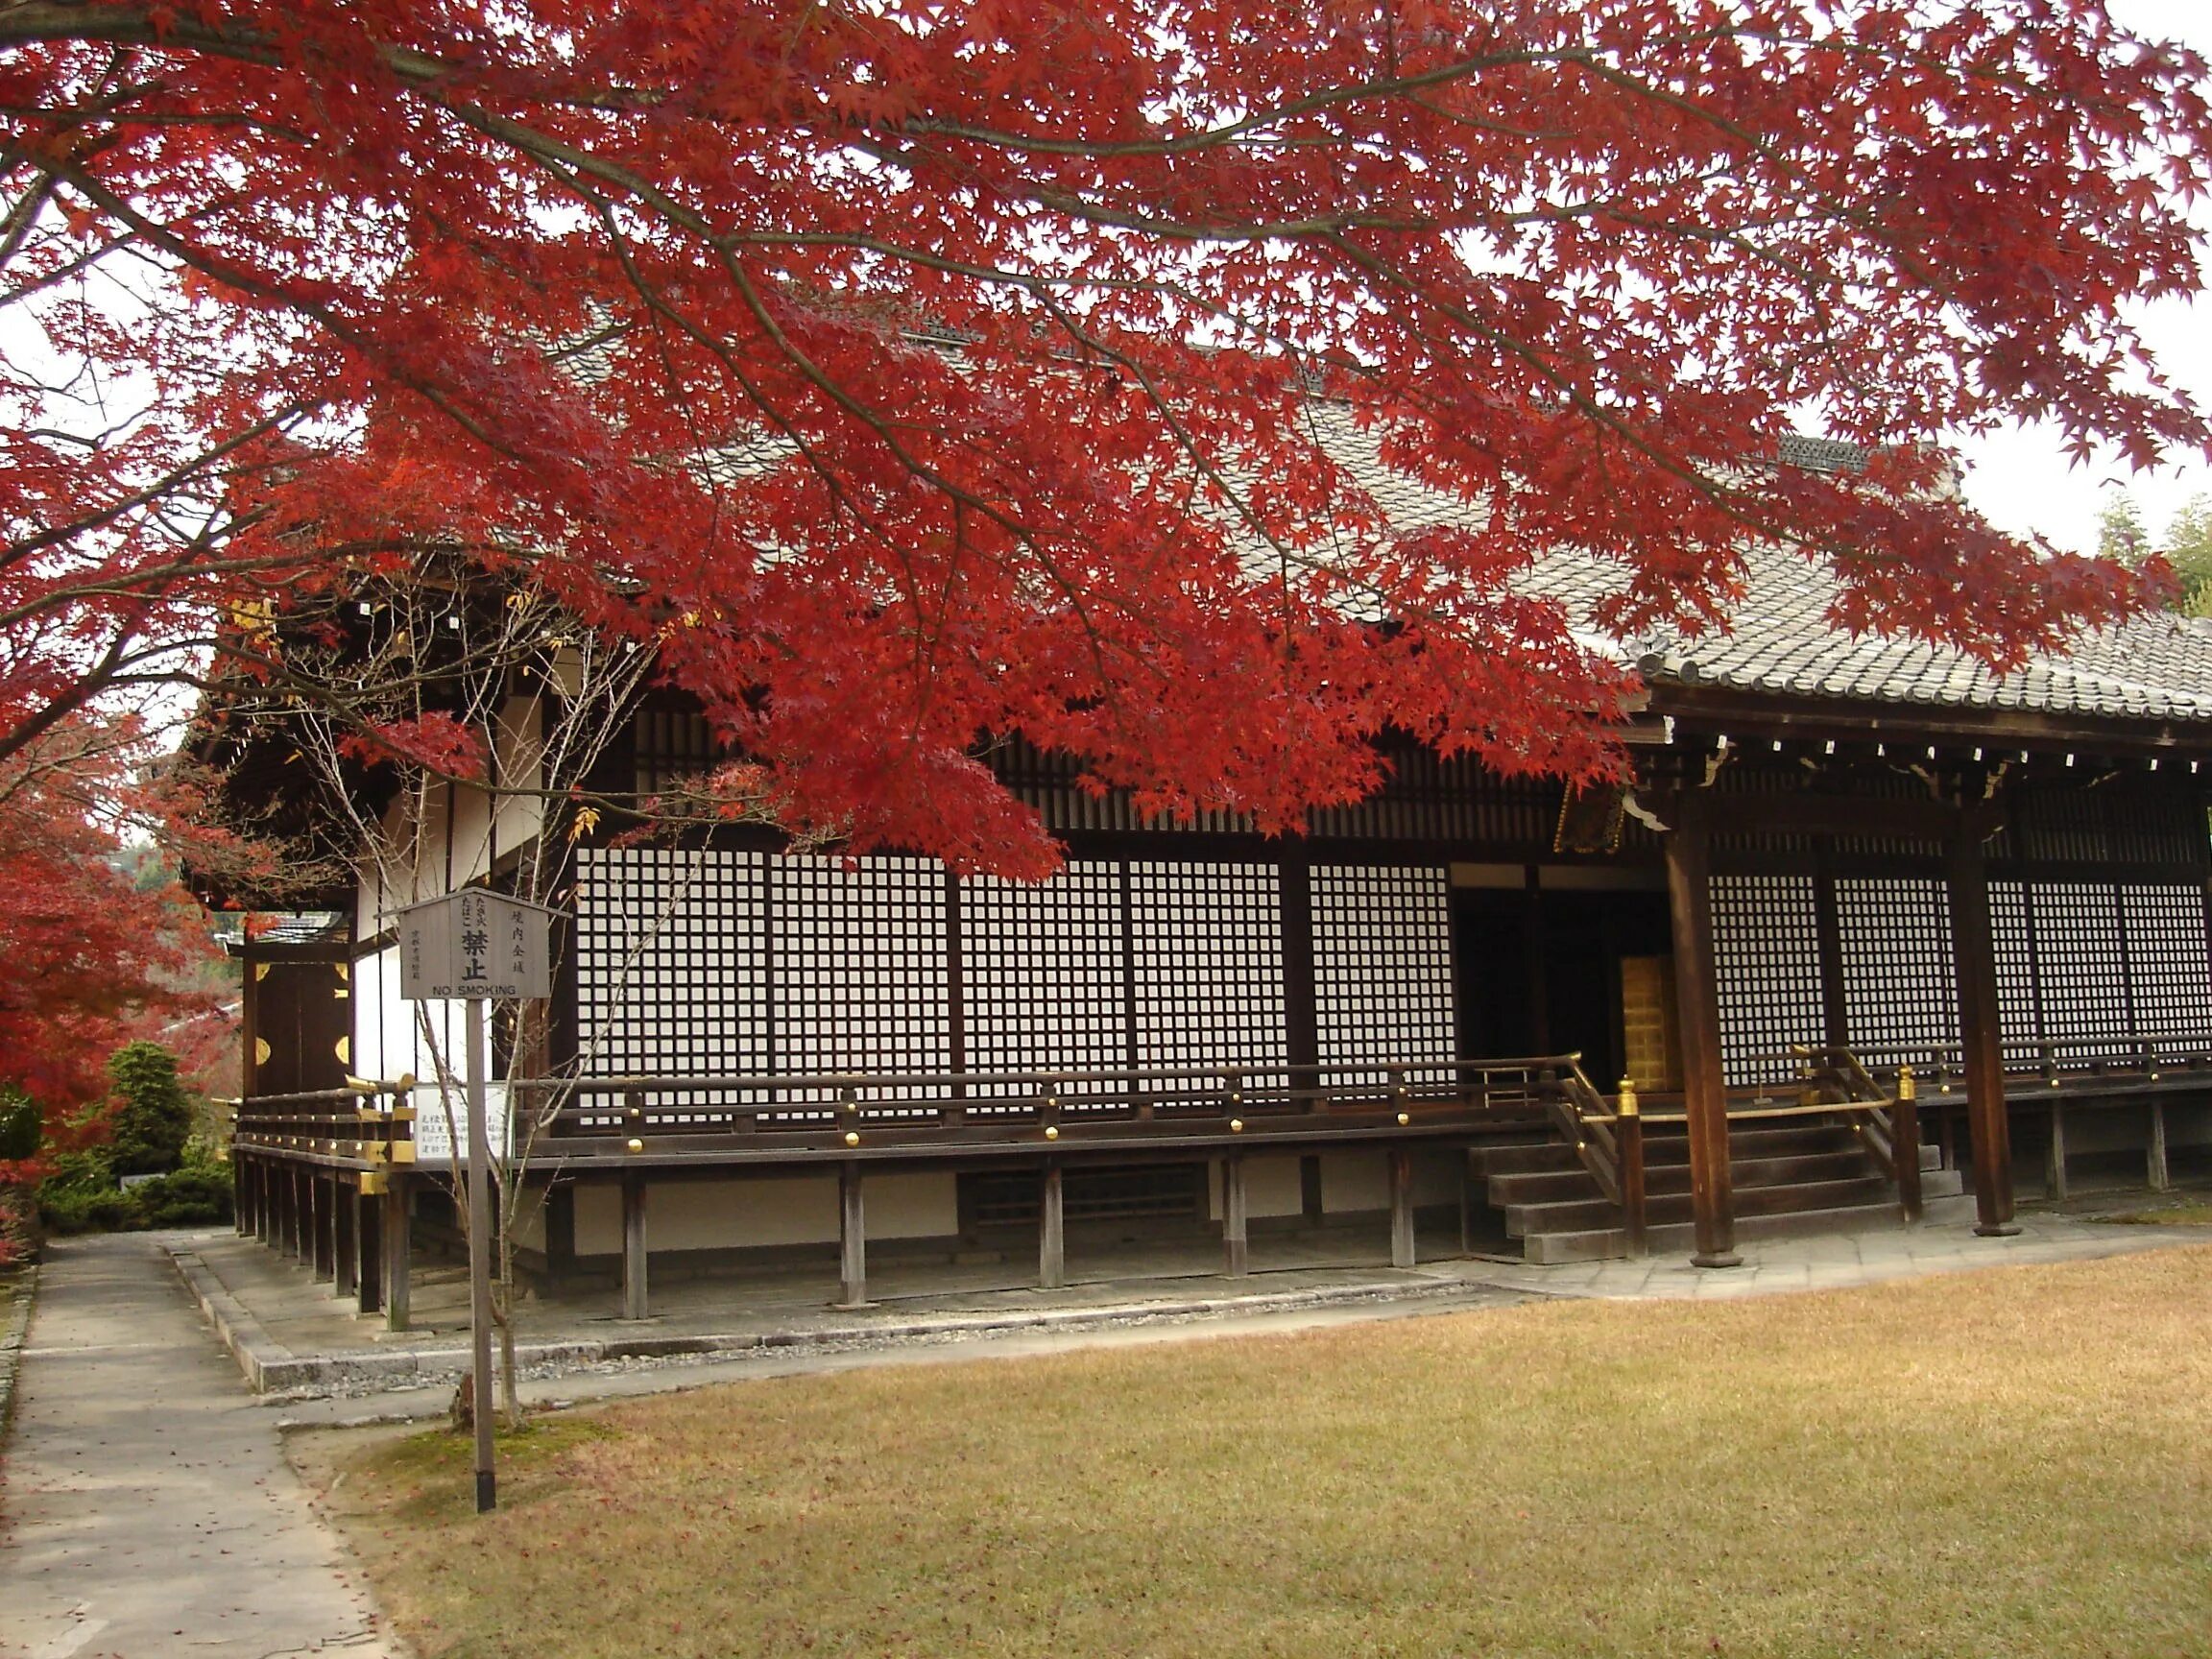 Японский дом 6 букв. Синдэн Япония. Япония Дайго дзи храм. Стиль Синдэн-дзукури.